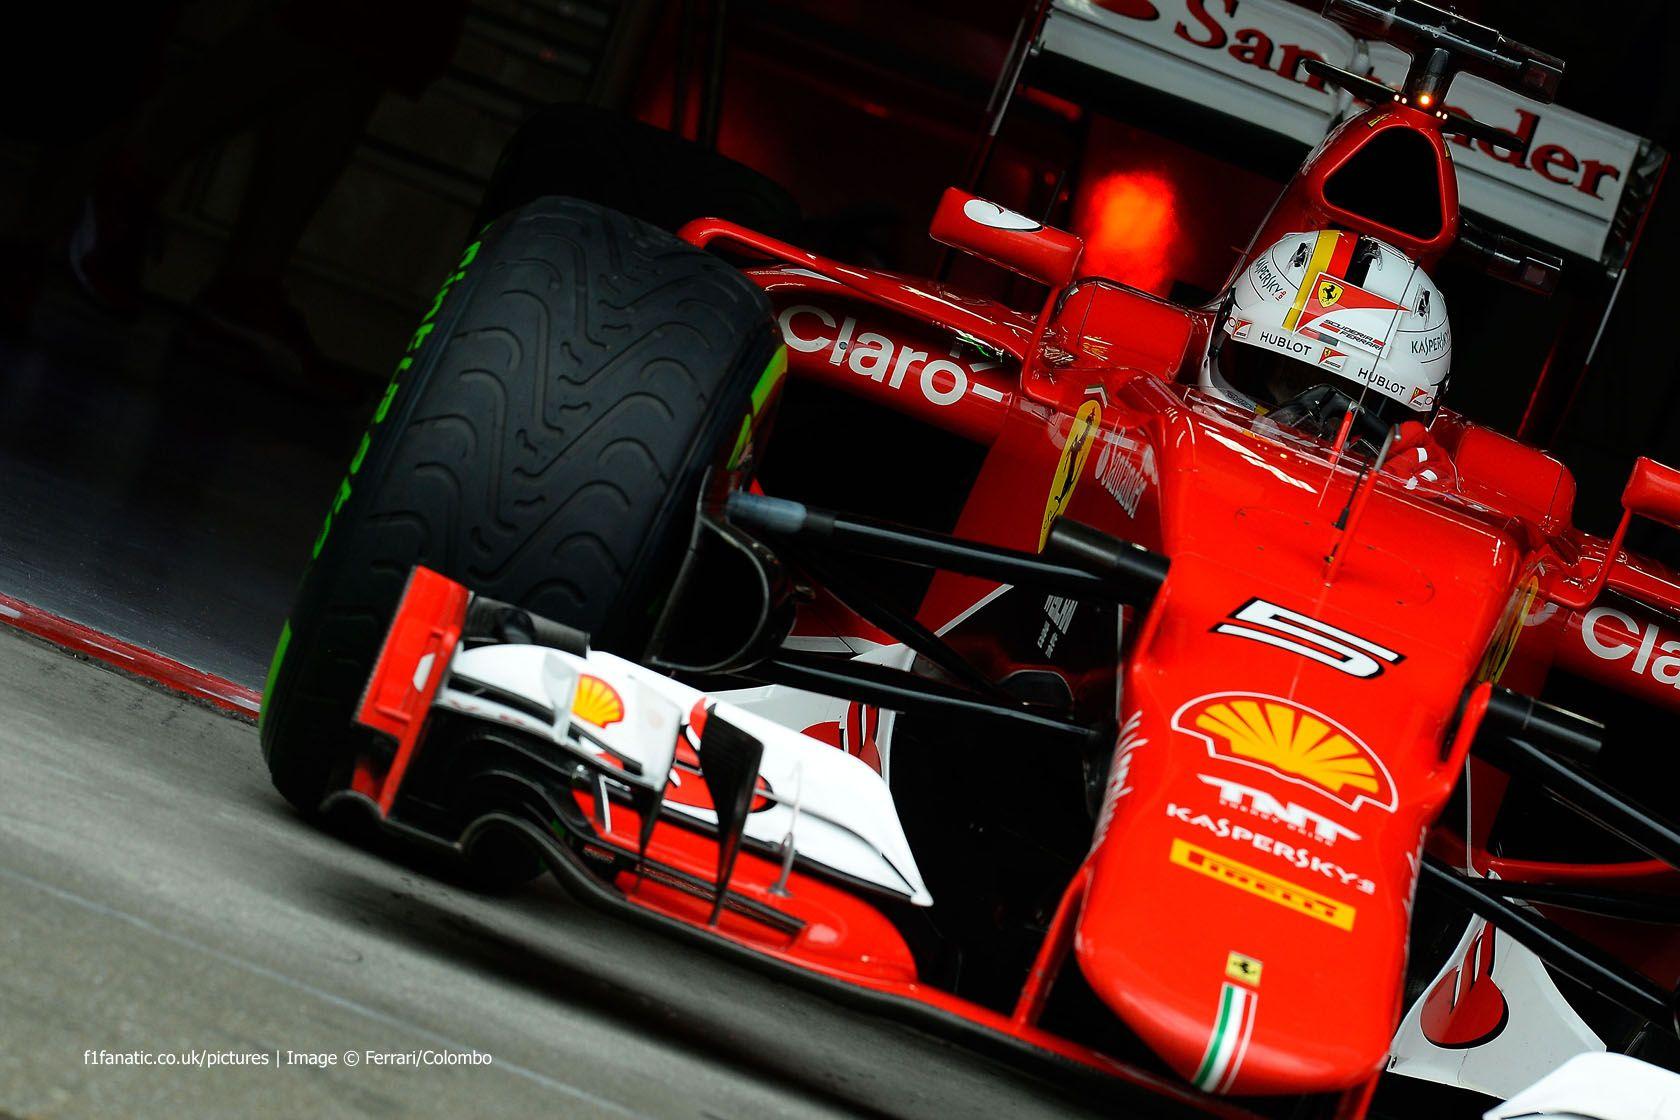 Ferrari F team information